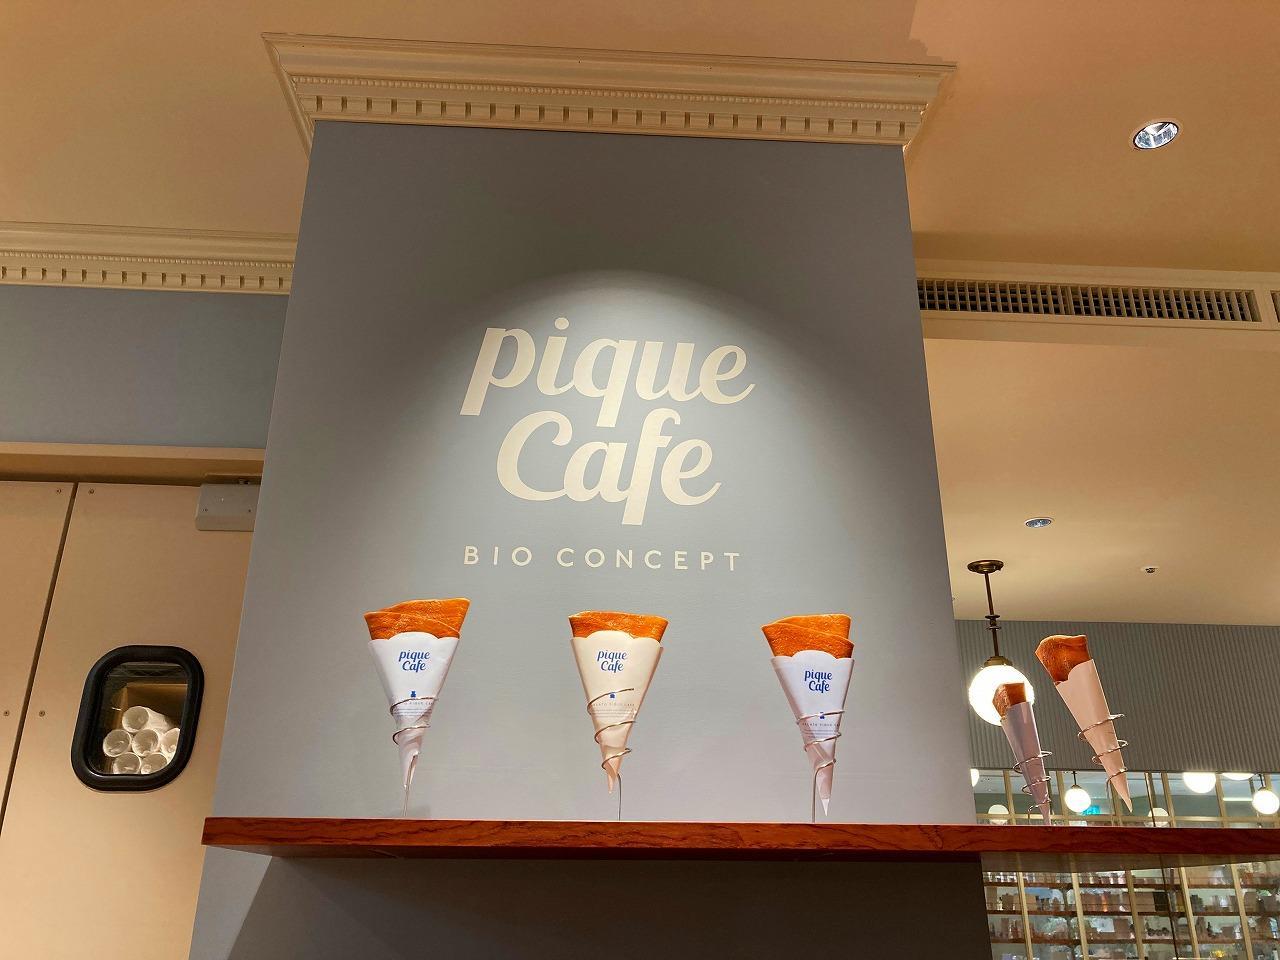 gelato pique cafe bio concept （ジェラートピケカフェ ビオコンセプト）